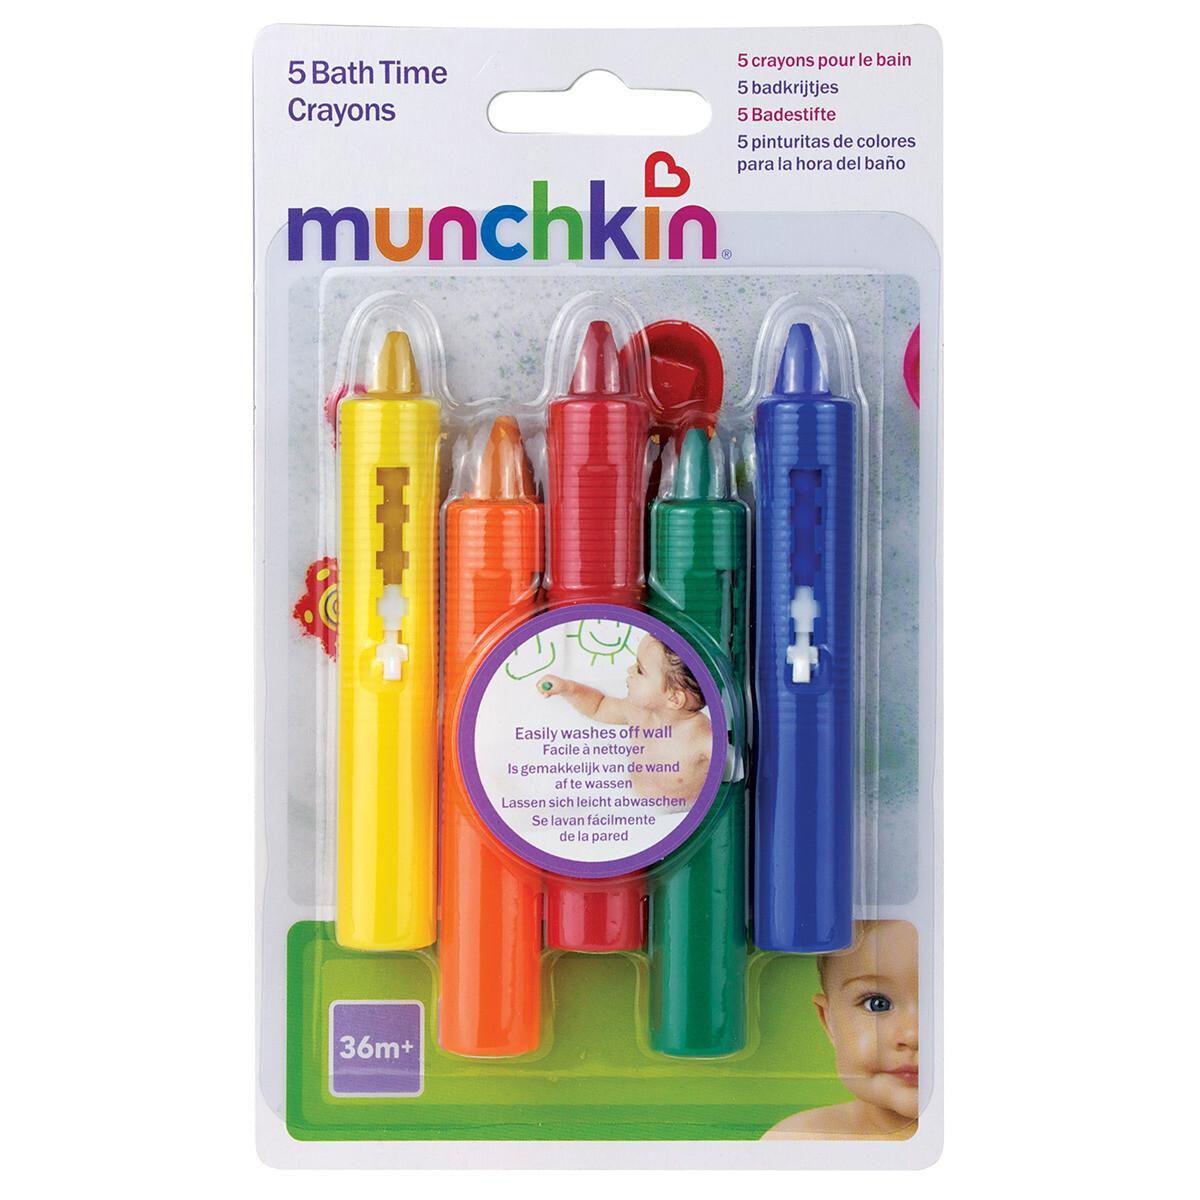 Munchkin- 5 BATH TIME CRAYONS